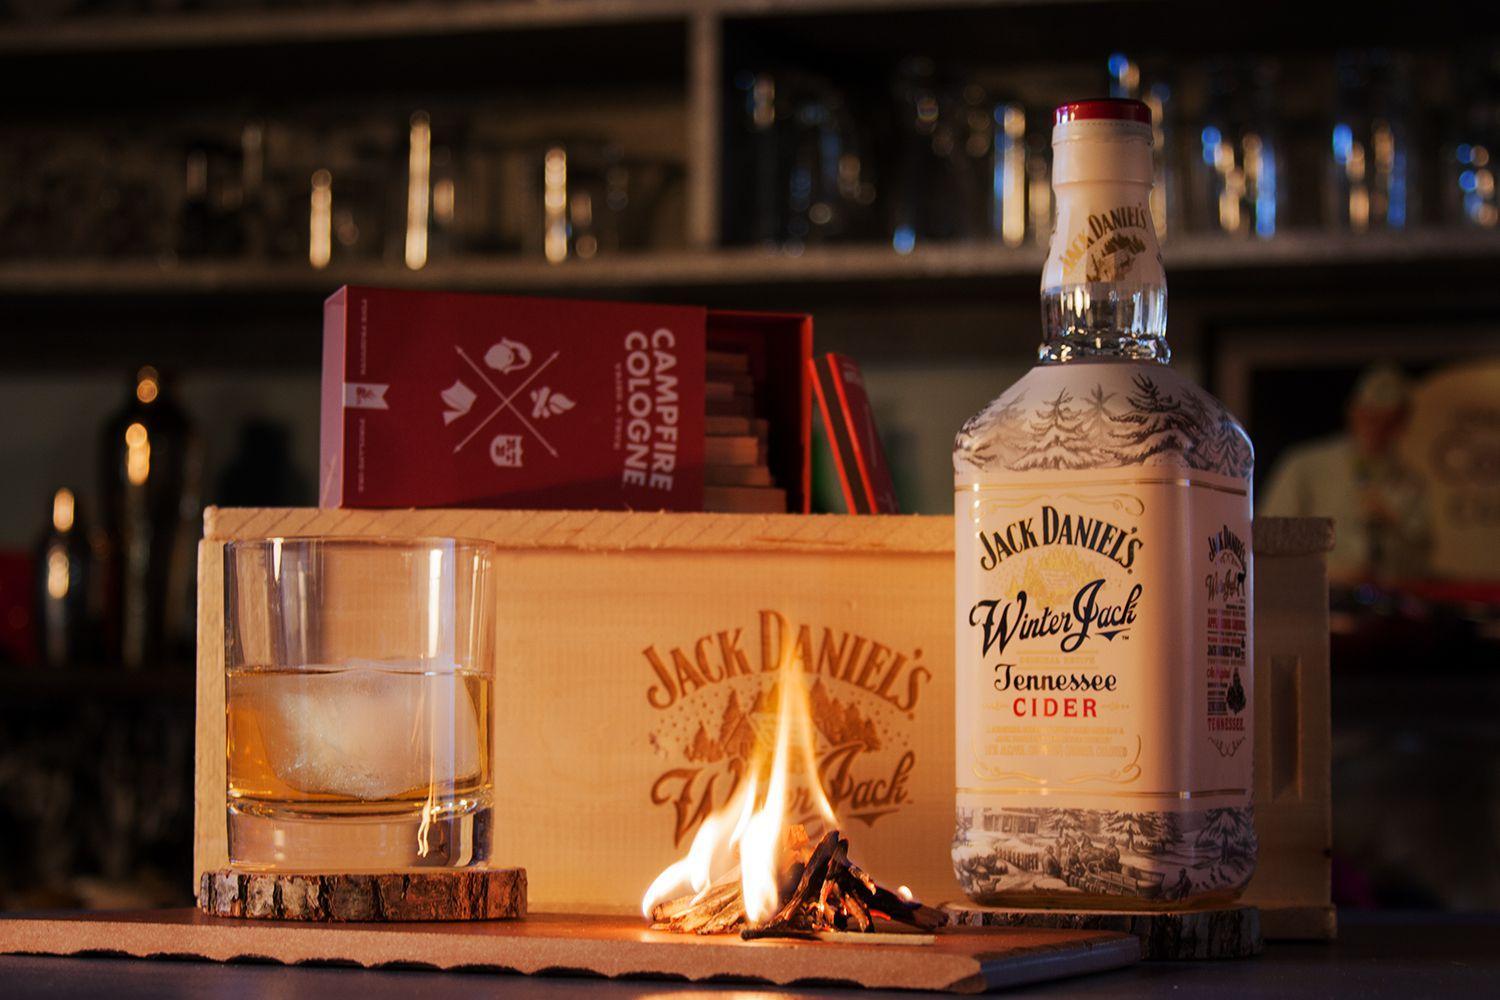 Jack Daniel's Winter Jack Tennessee Cider advertisement 